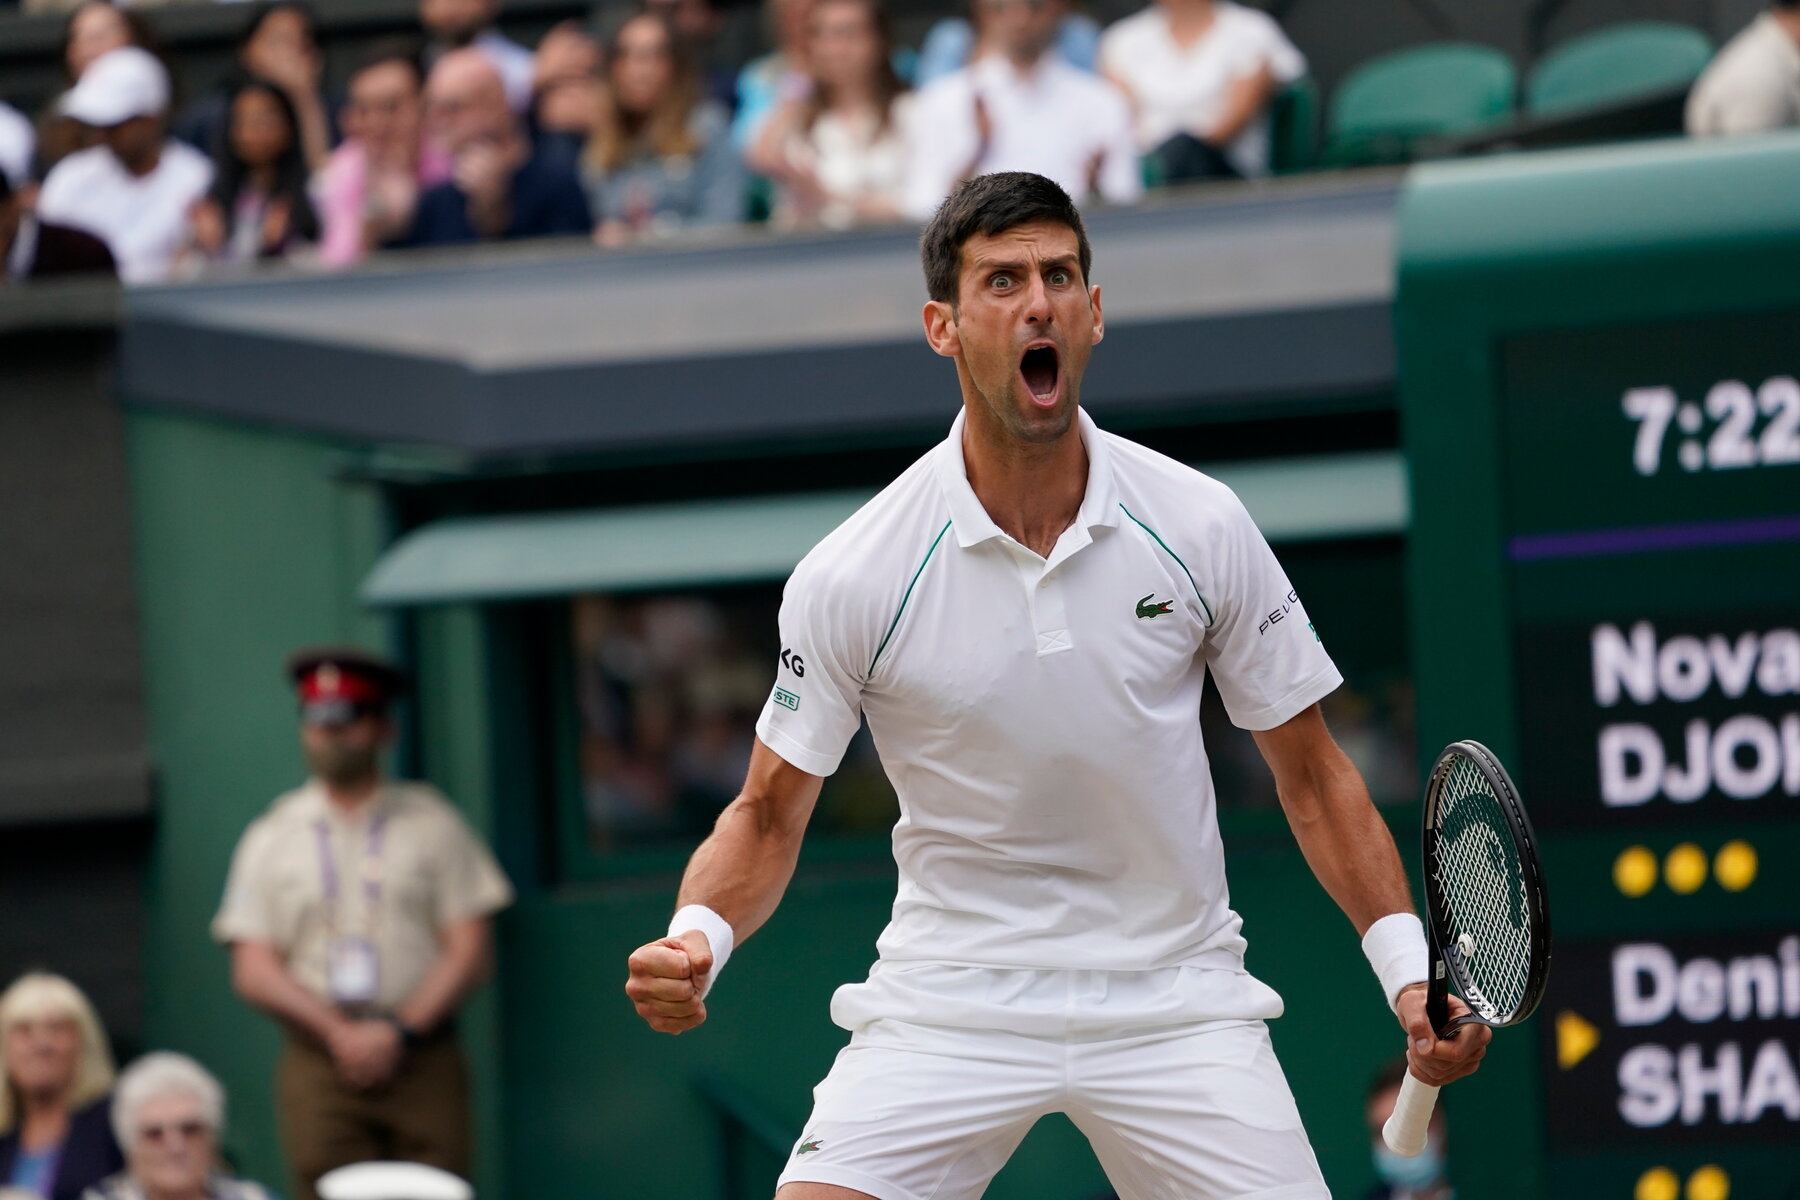 Djokovic Berrettini odds Wimbledon